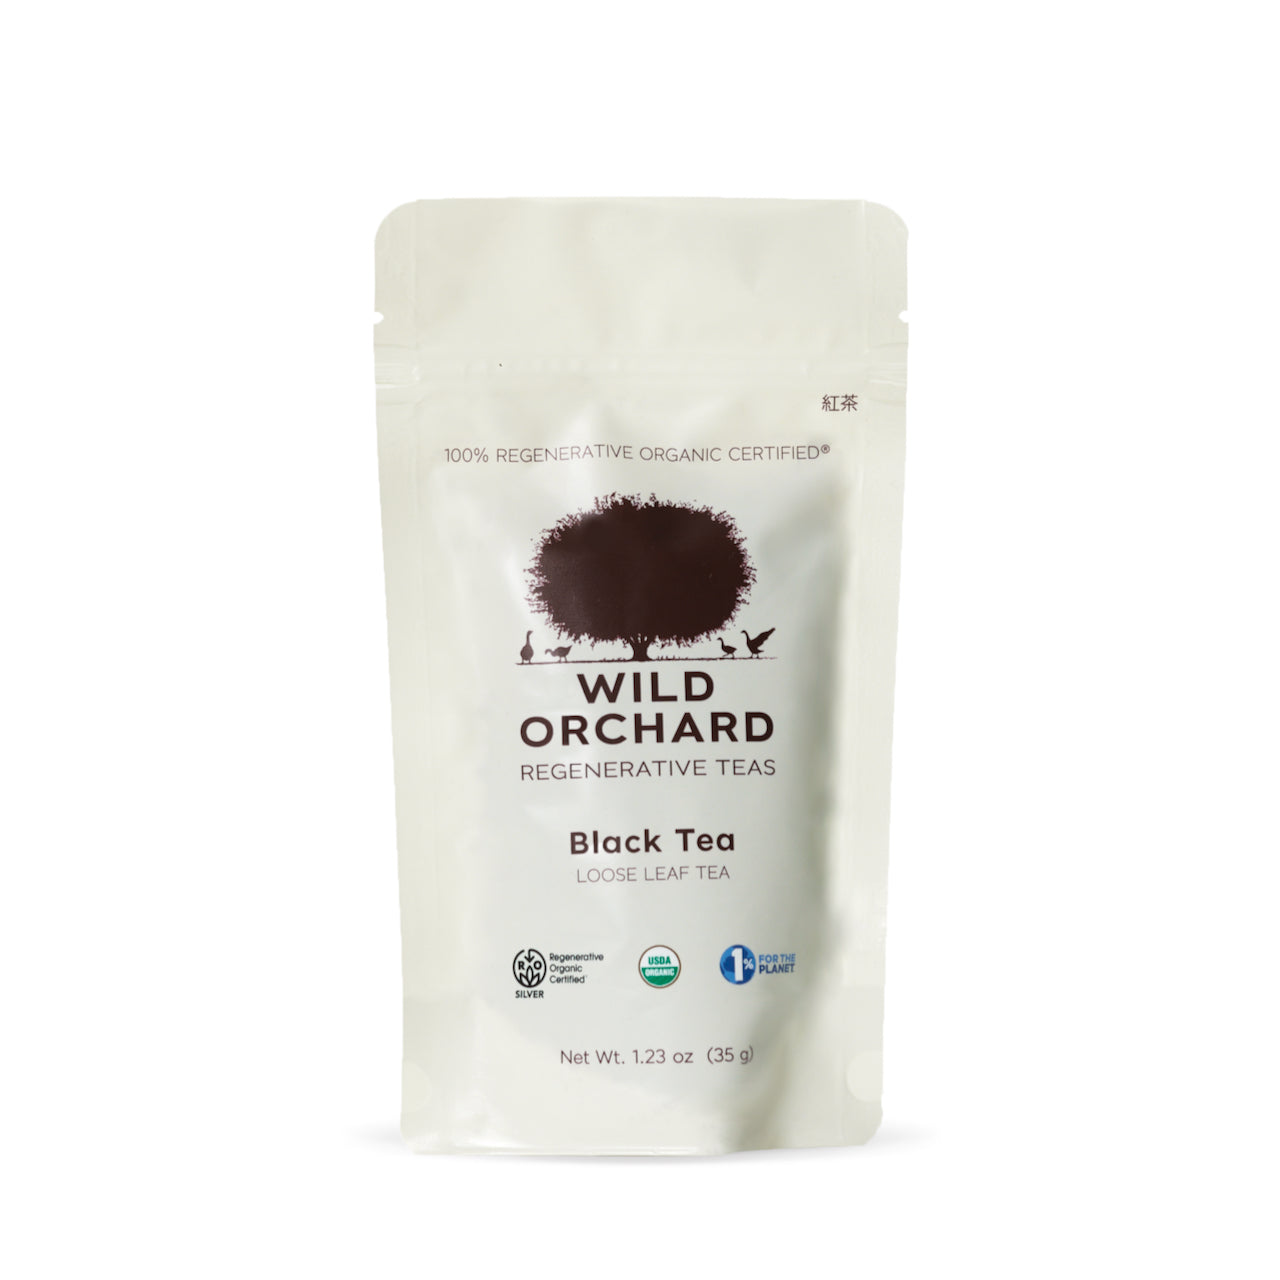 Wild Orchard Tea Black Tea - Loose Leaf Bag - 6 Bags by Farm2Me